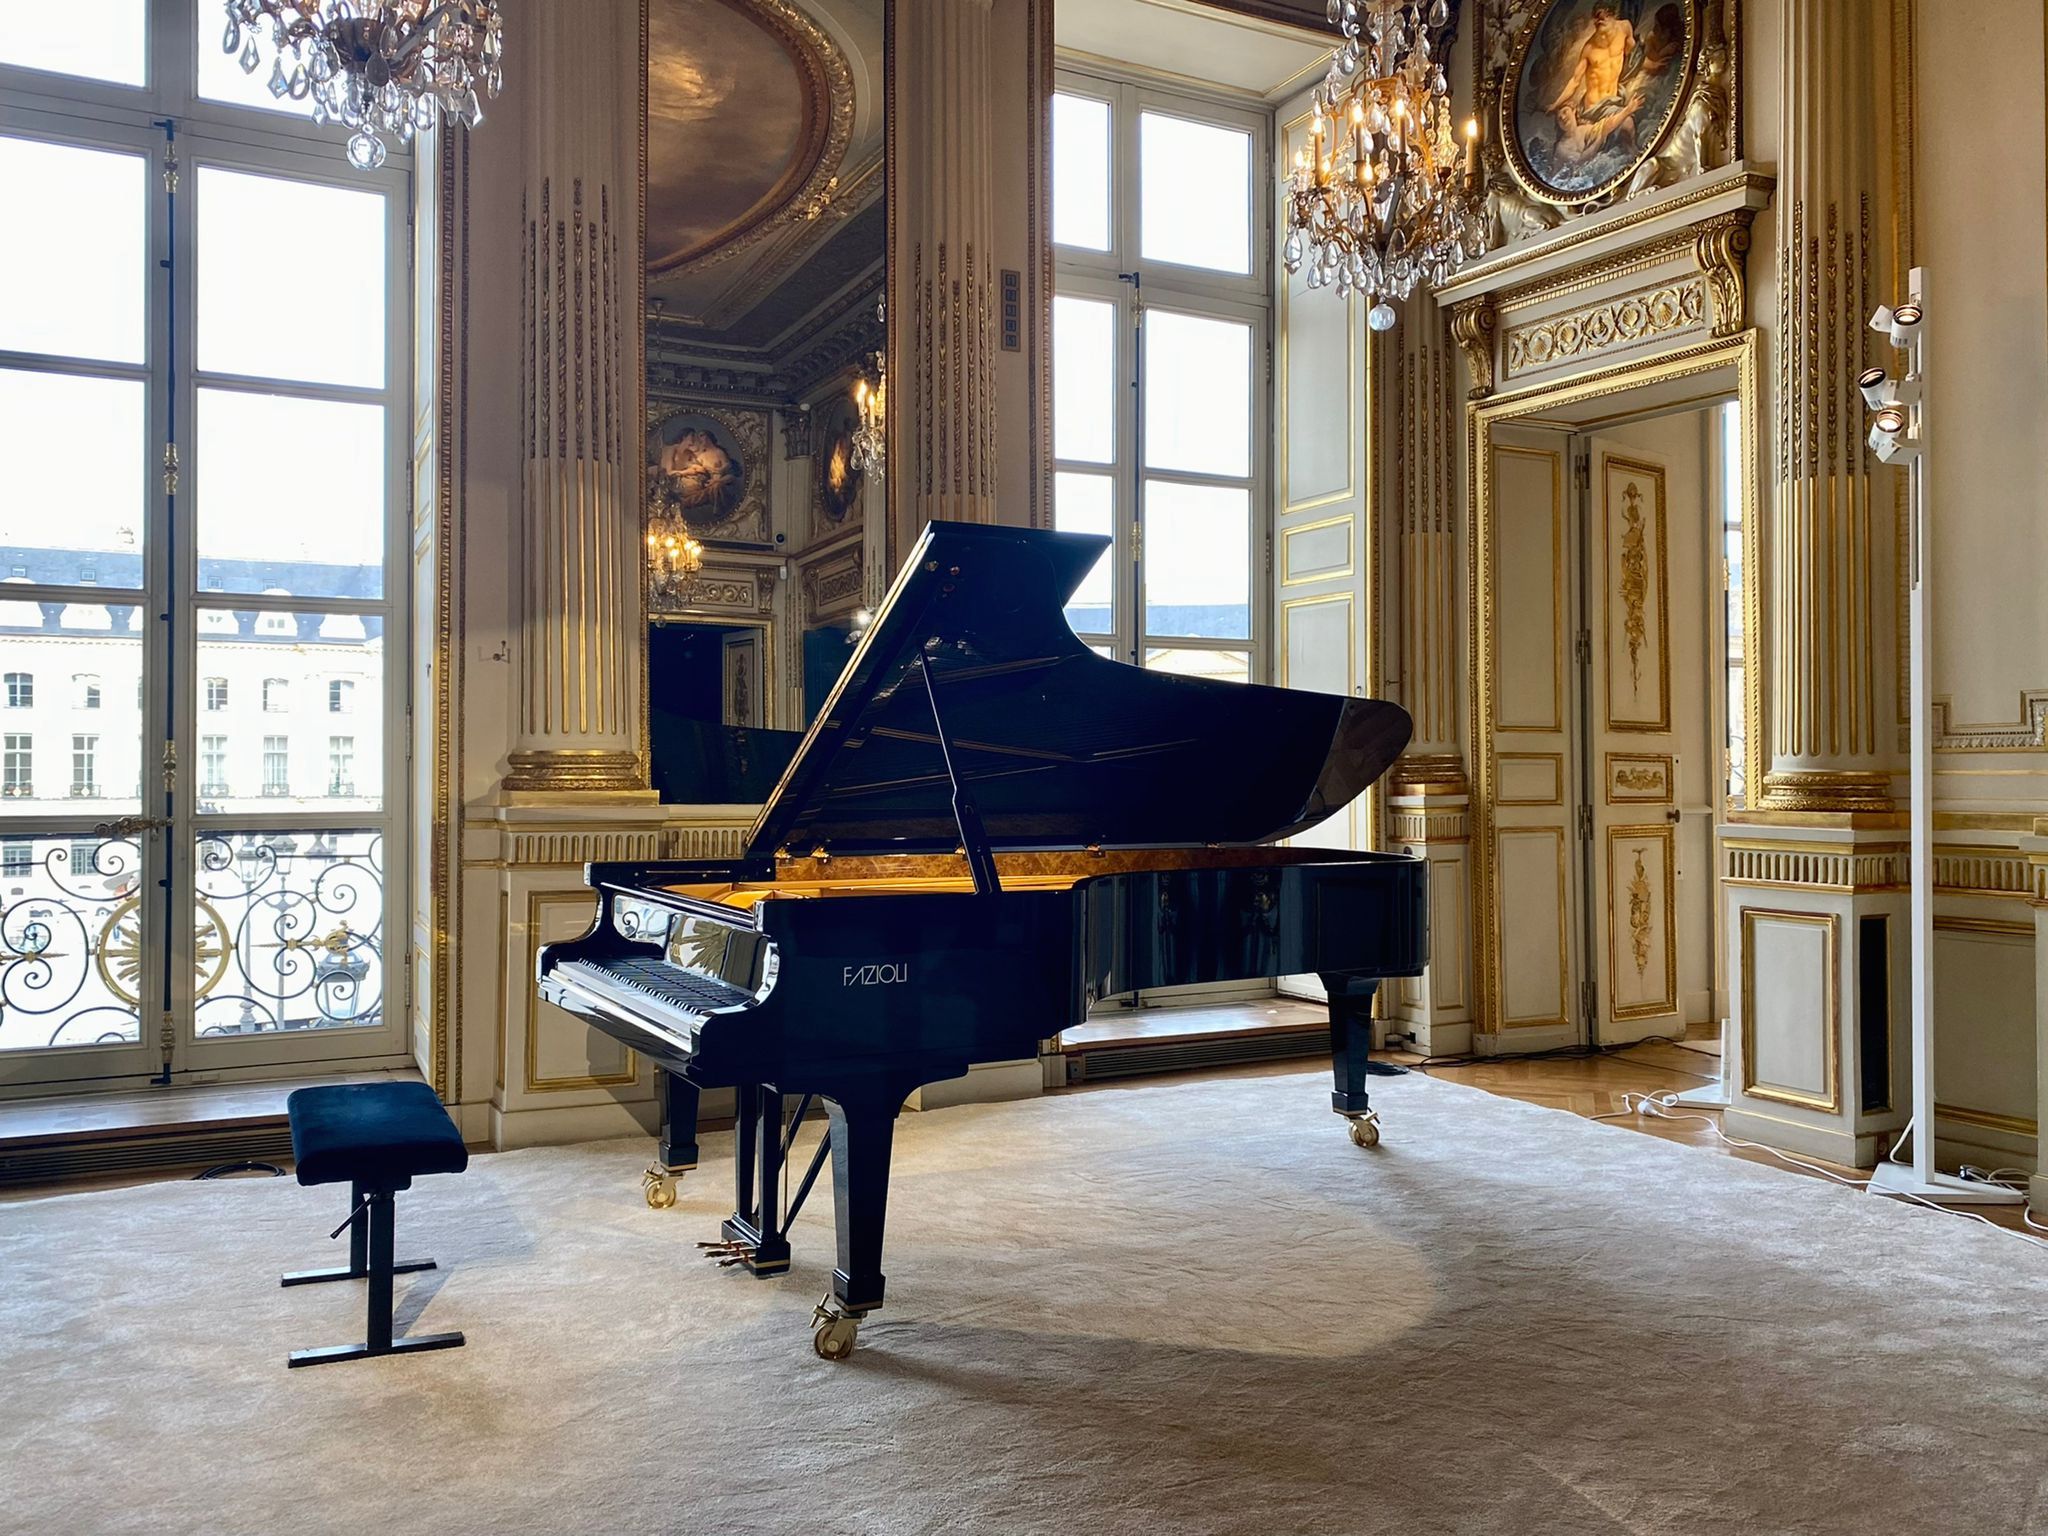 Piano de concert FAZIOLI F278 Salle Chopin Place Vendôme